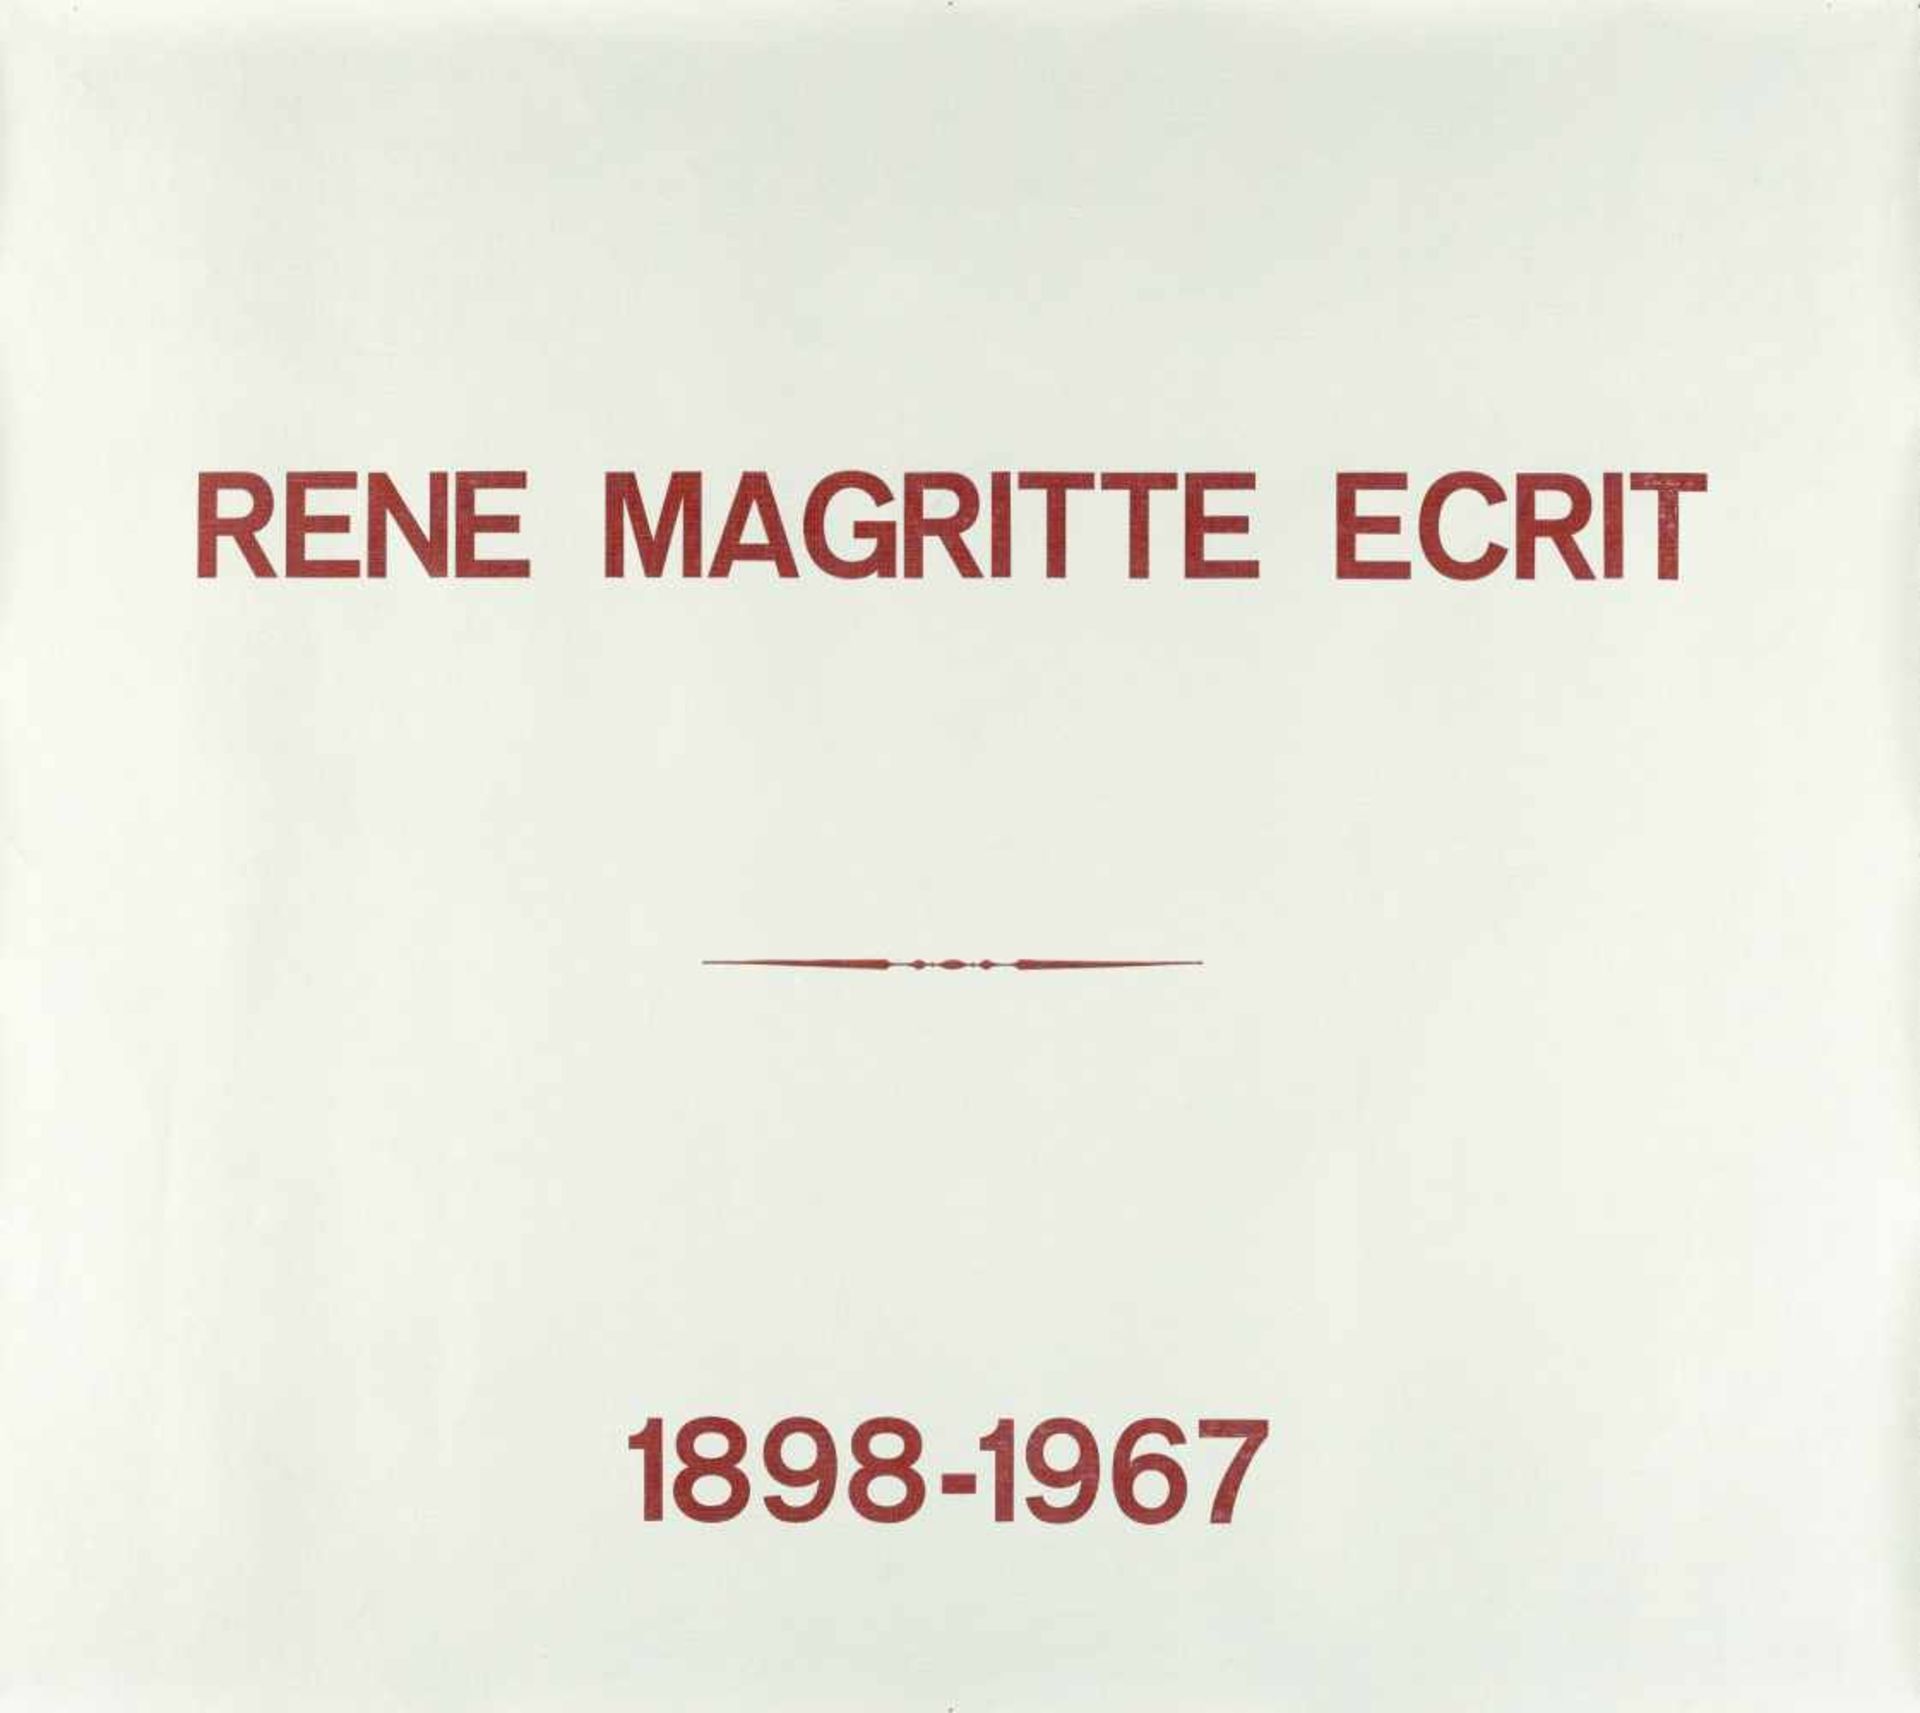 Marcel Broodthaers1924 Brüssel - Köln 1976RENE MAGRITTE ECRIT 1898-1967Farbiger Buchdruck auf